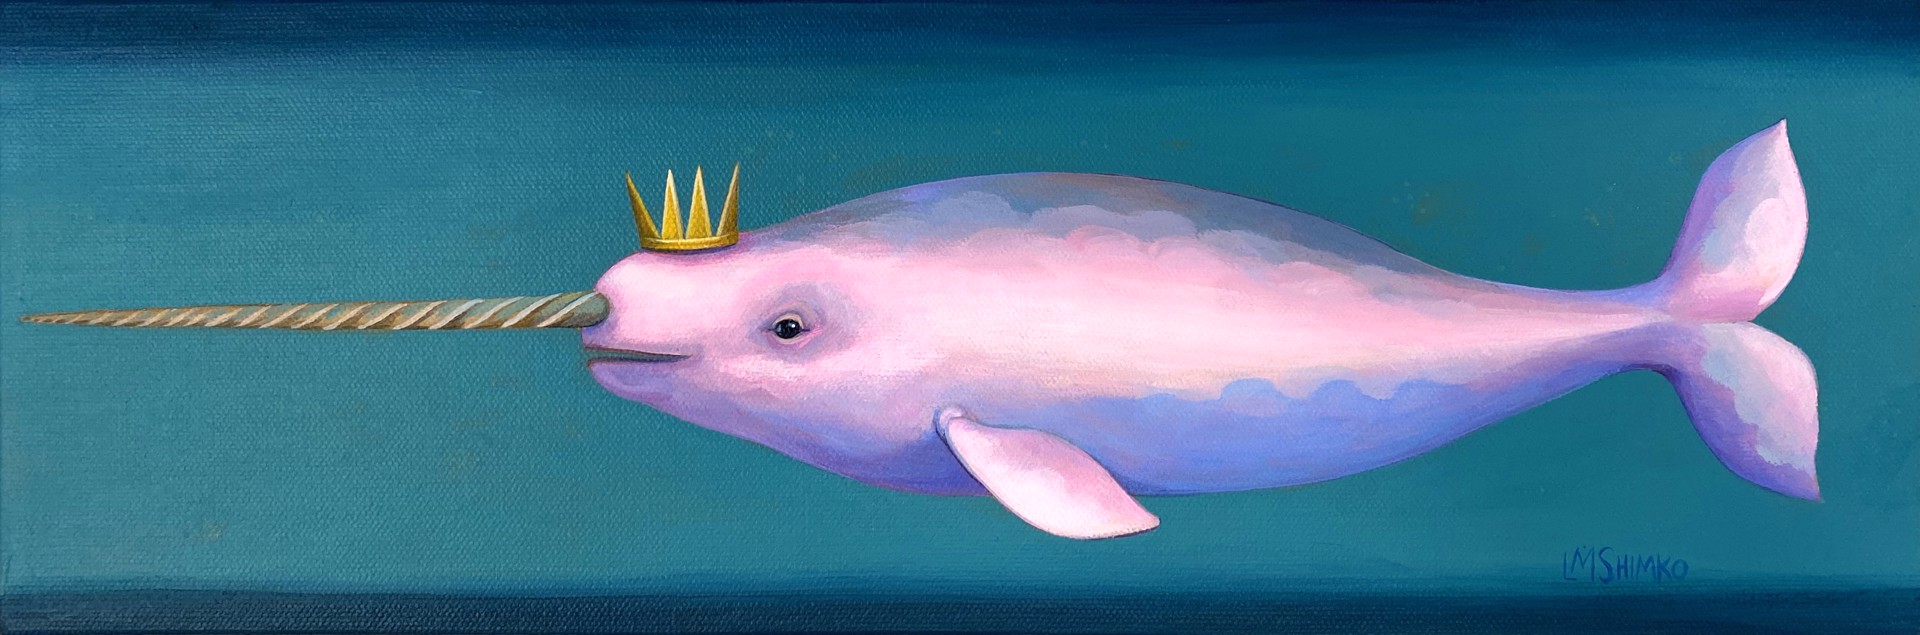 Royal Ocean Unicorn 1 by Lisa Shimko